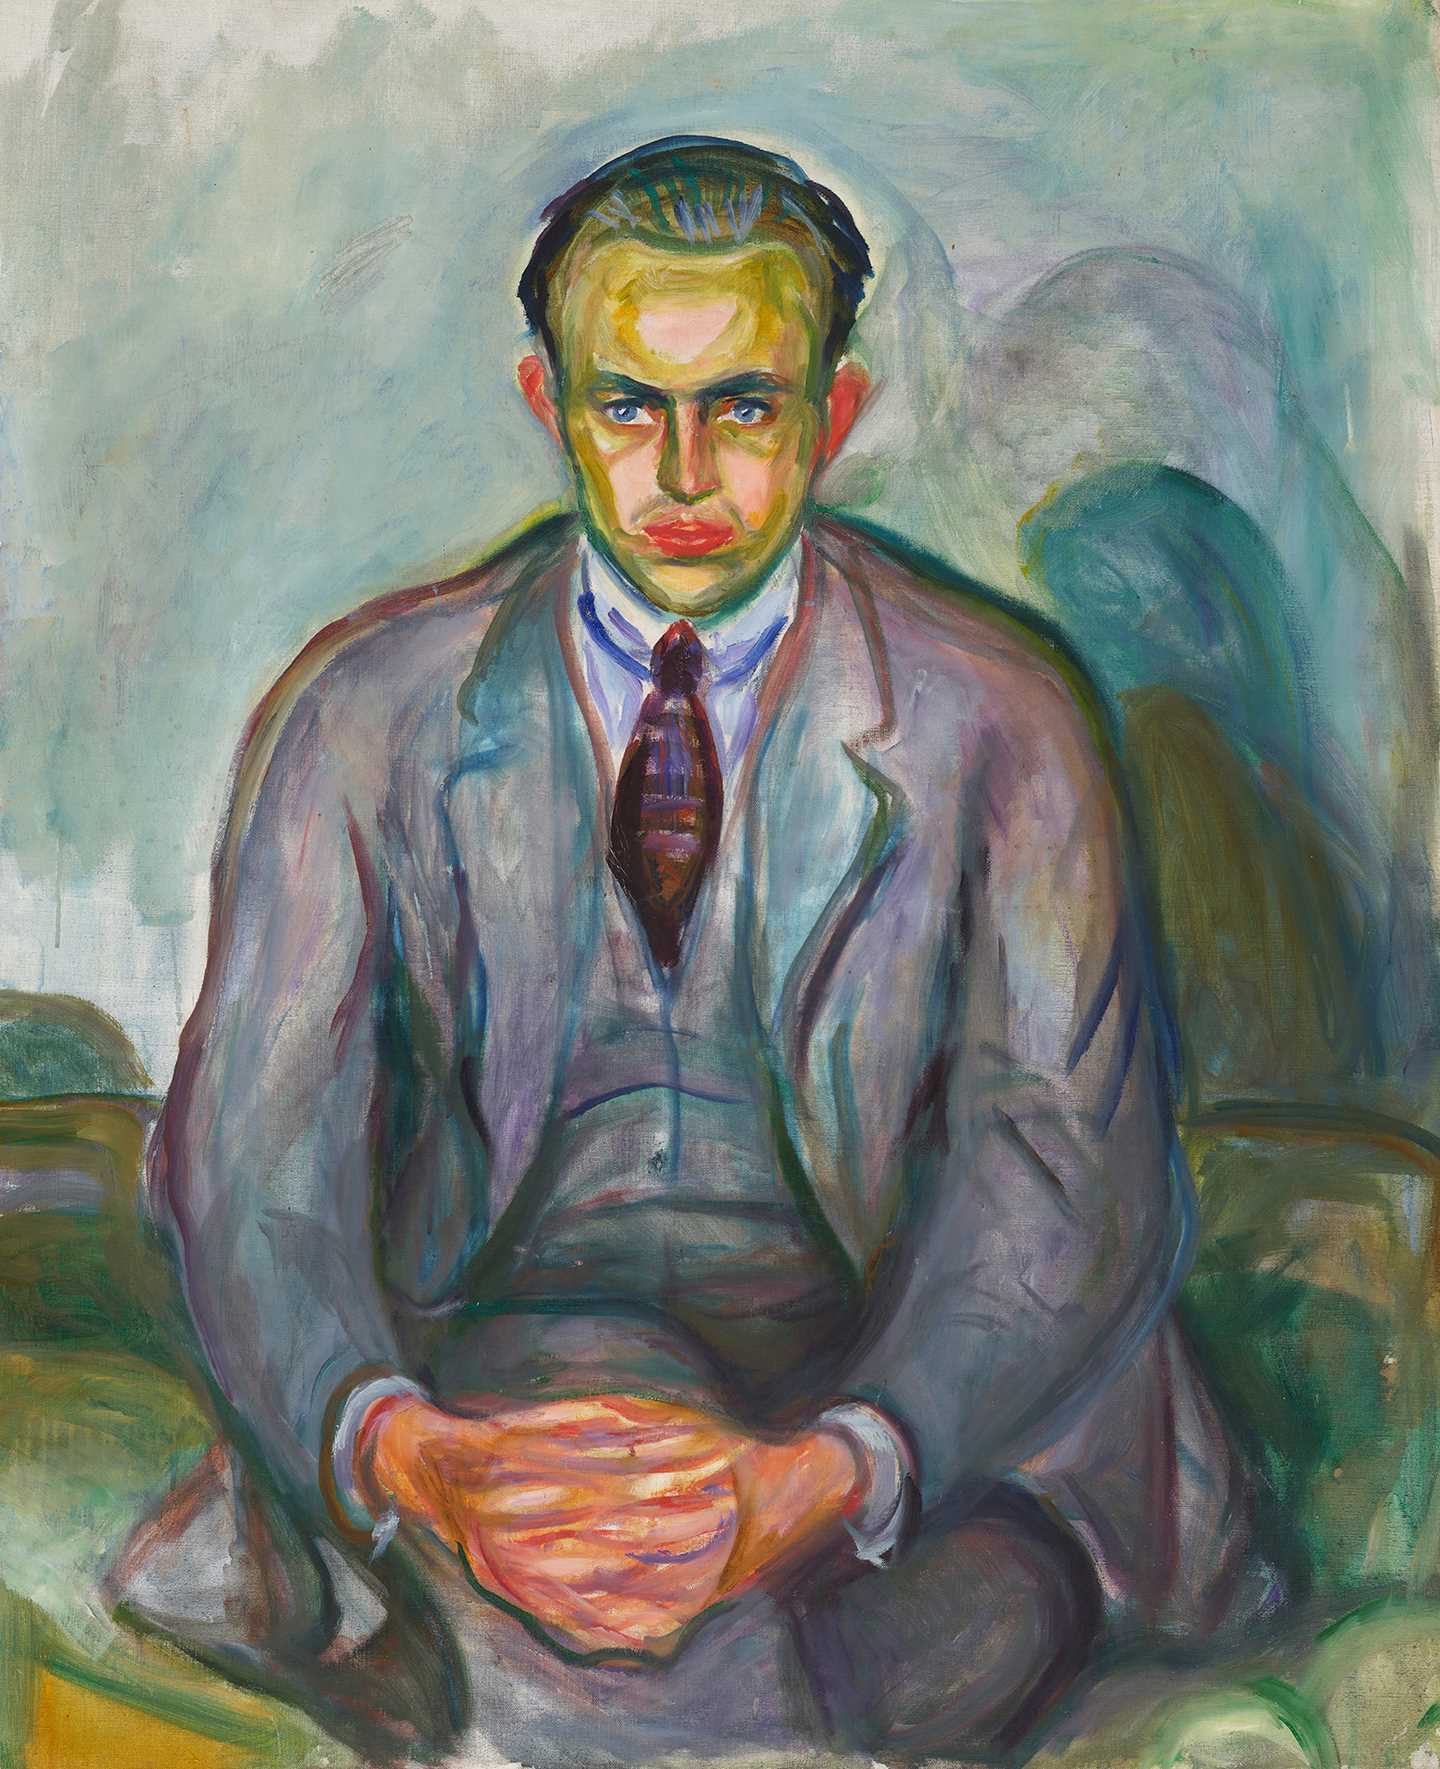 Edvard Munch: Rolf Stenersen. Oil on canvas, 1925-26. Photo © Munchmuseet